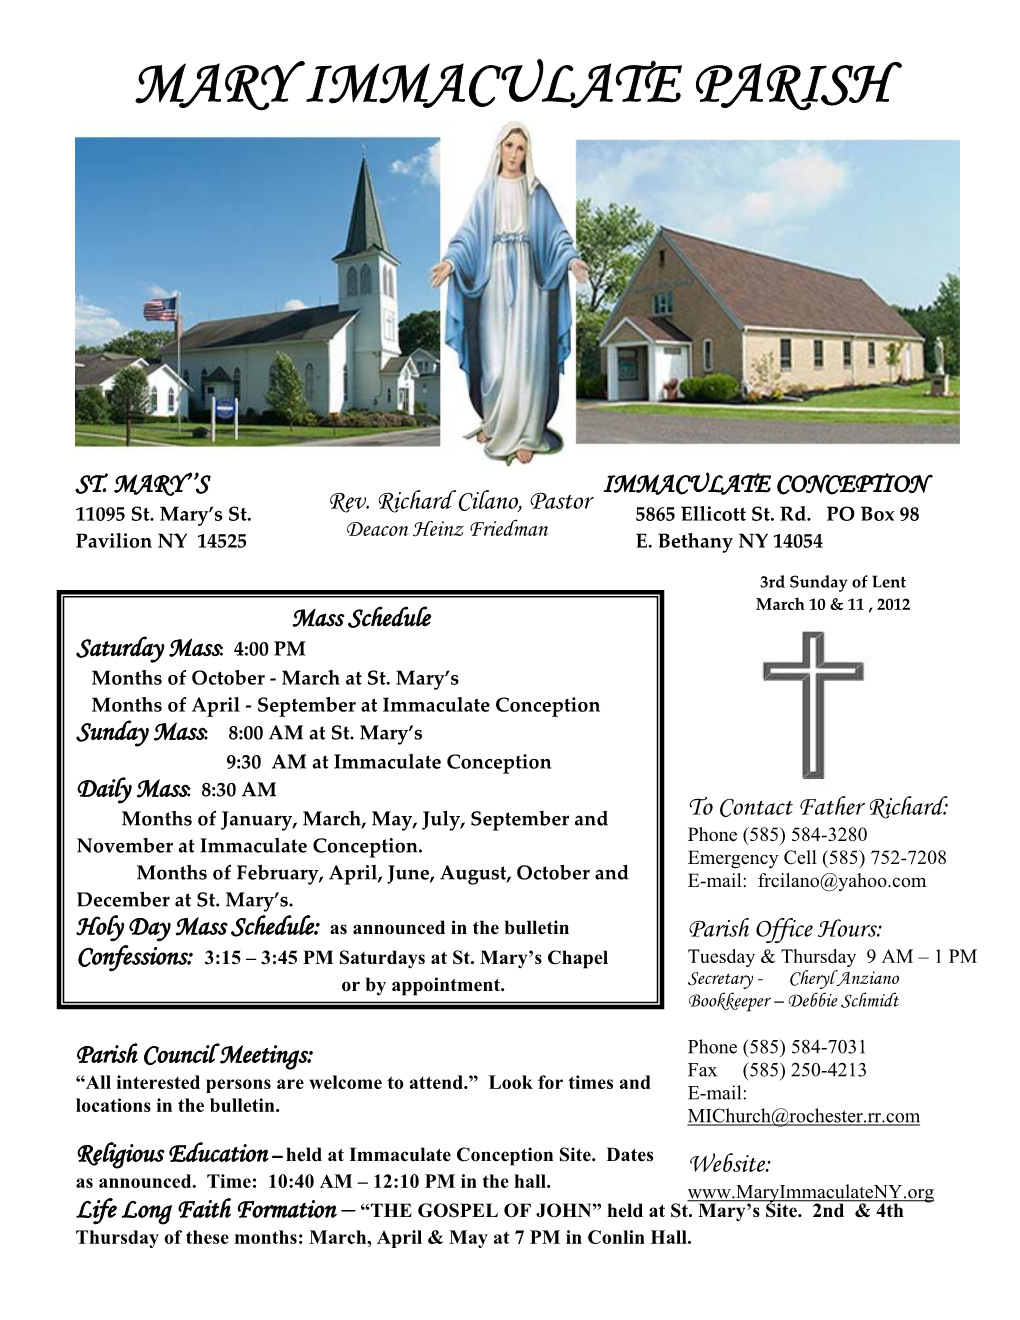 Mary Immaculate Parish